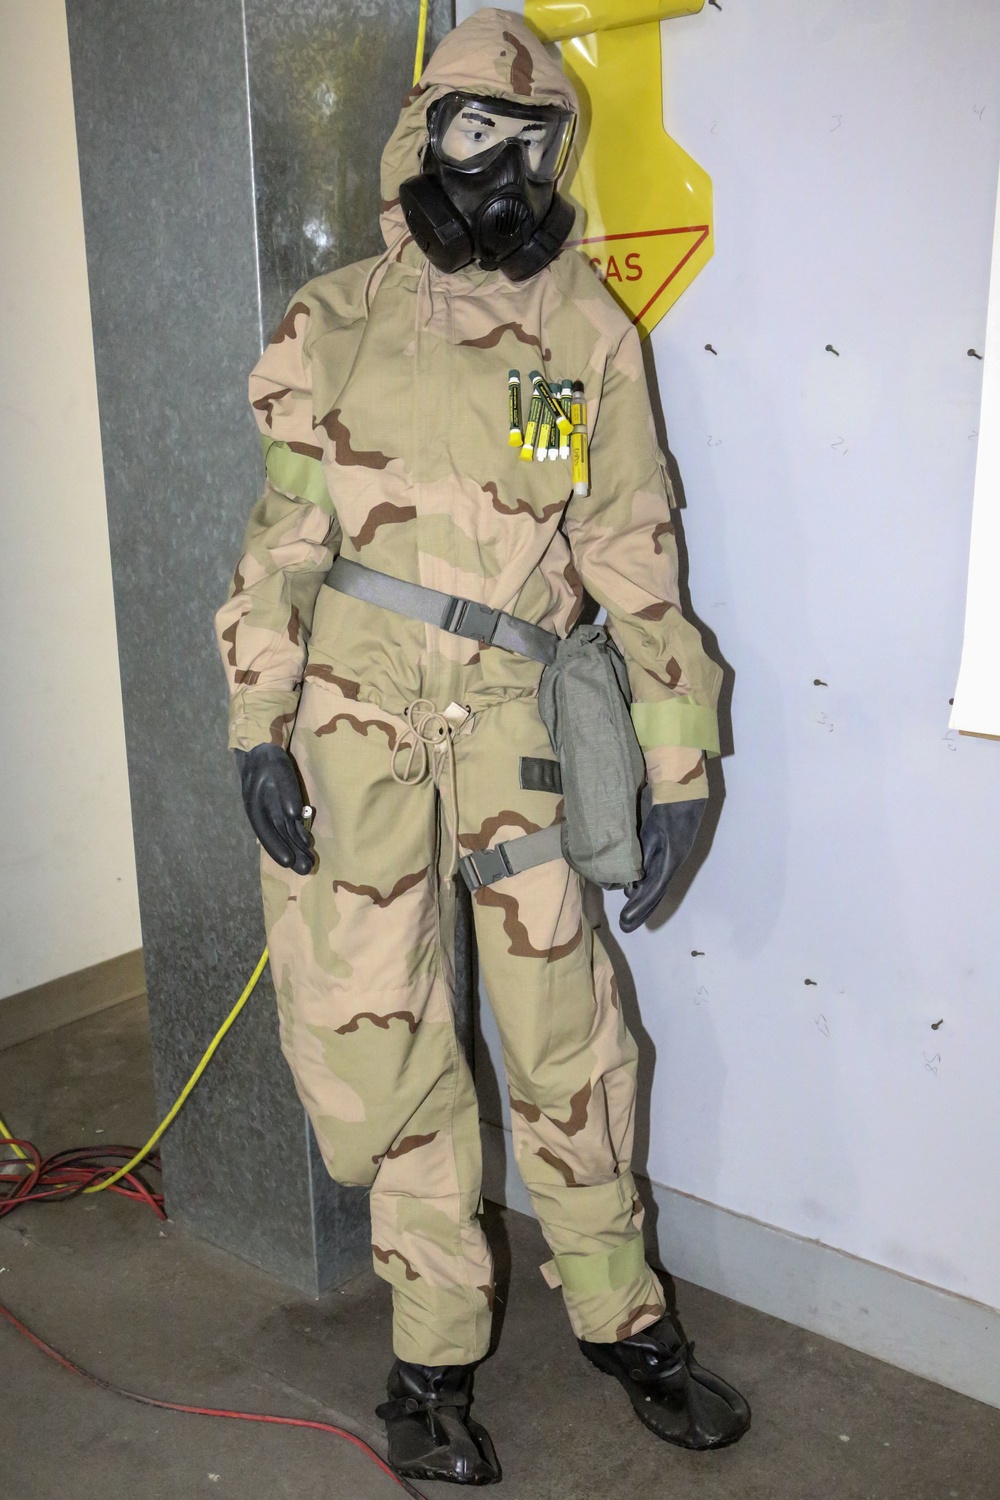 MAG-41 conducts CBRN training